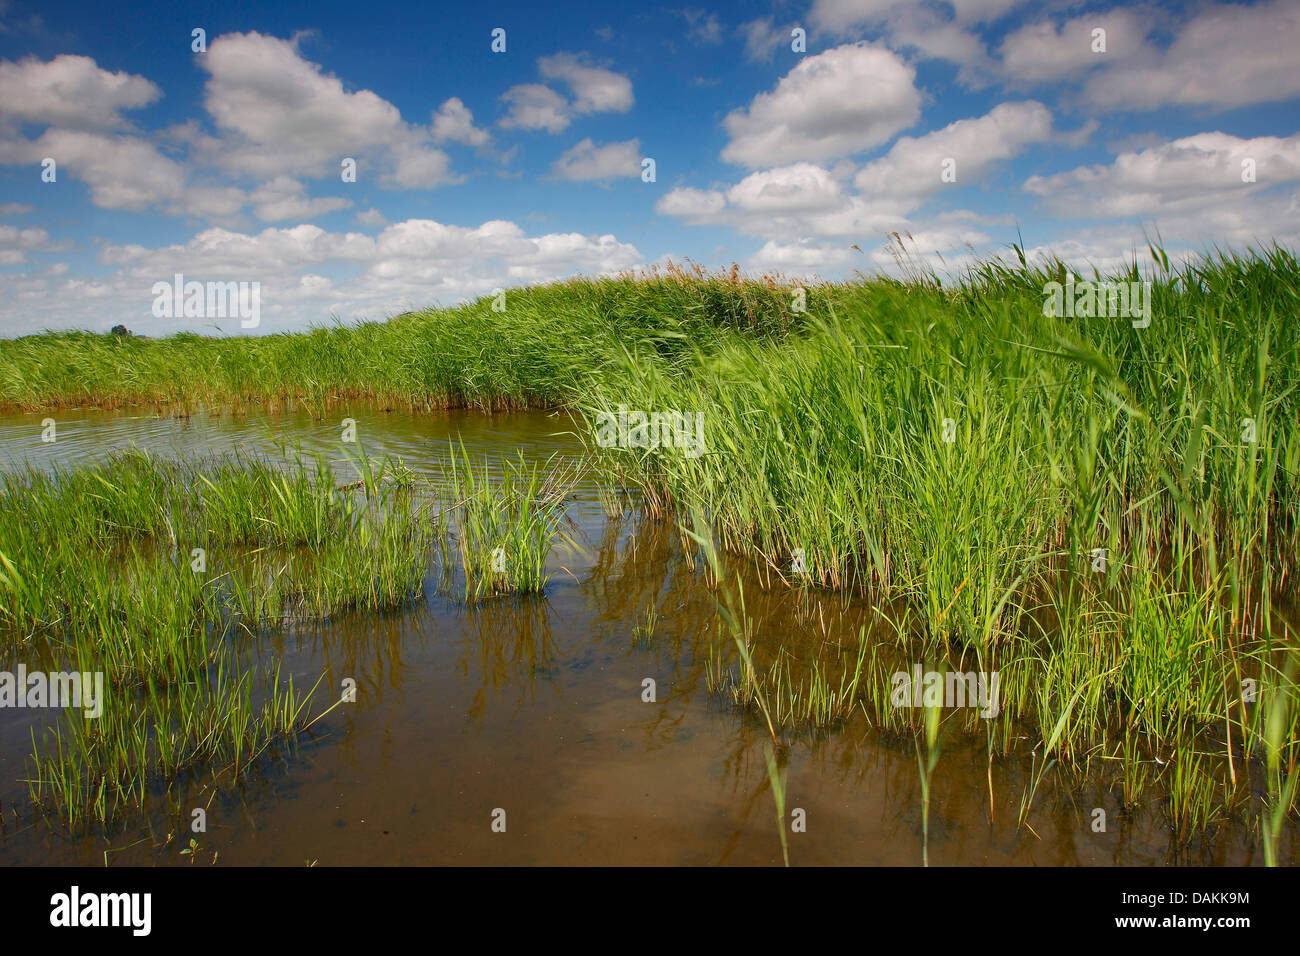 reed grass, common reed (Phragmites communis, Phragmites australis), in shallow water, Belgium, Natuurreservaat, Blankaart Stock Photo